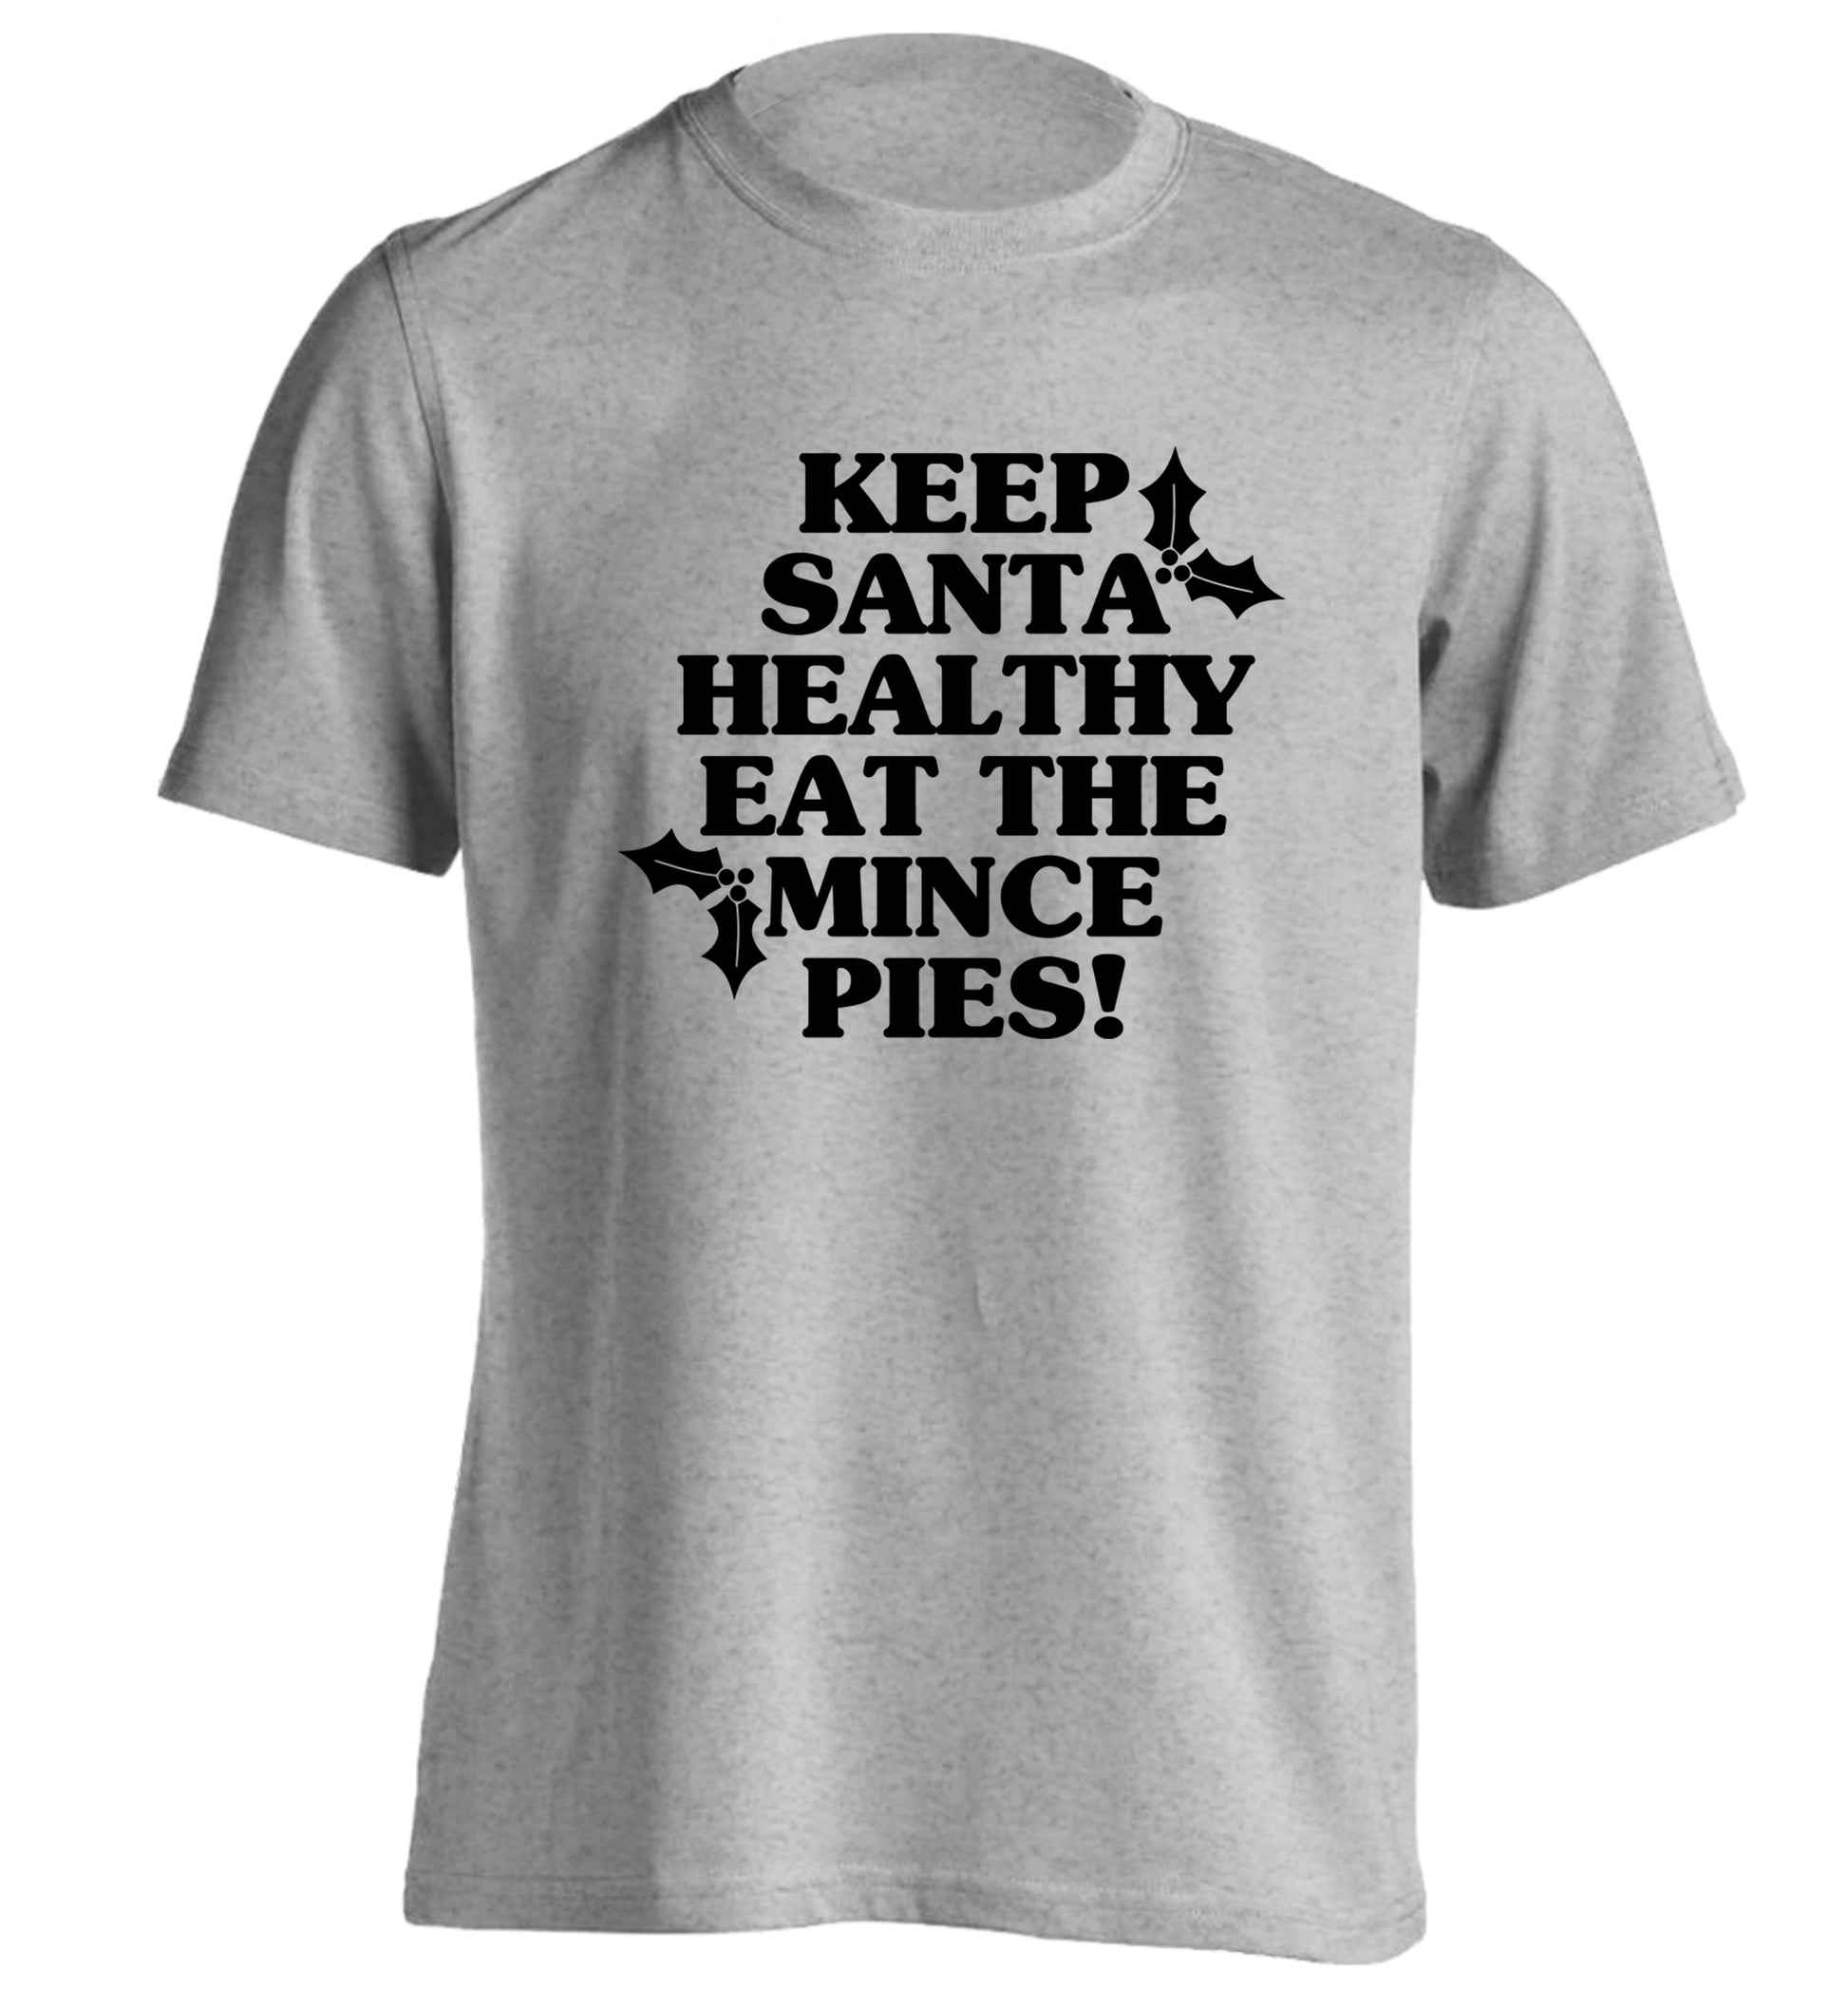 Keep santa healthy eat the mince pies adults unisex grey Tshirt 2XL